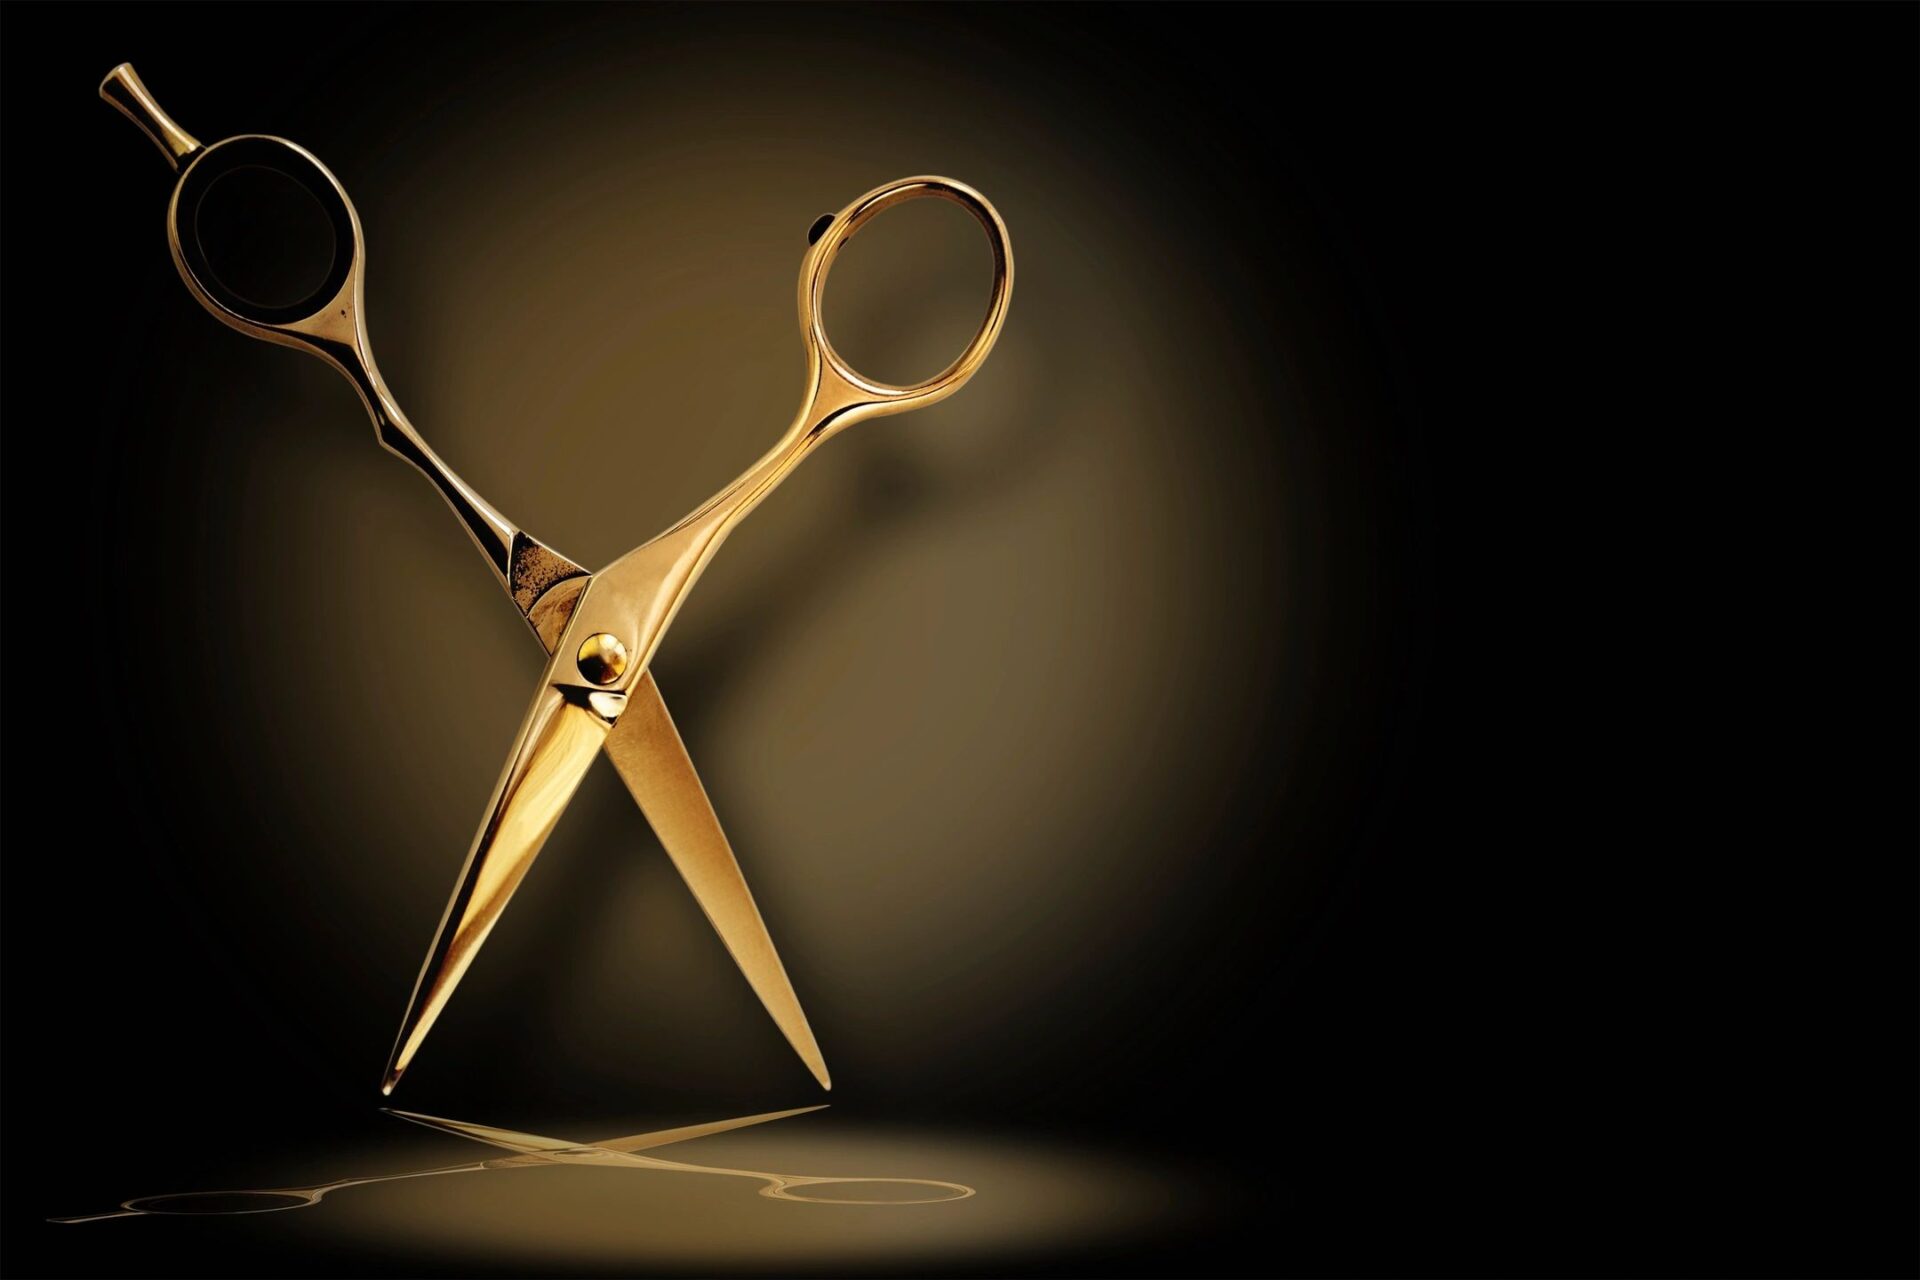 A pair of golden scissors